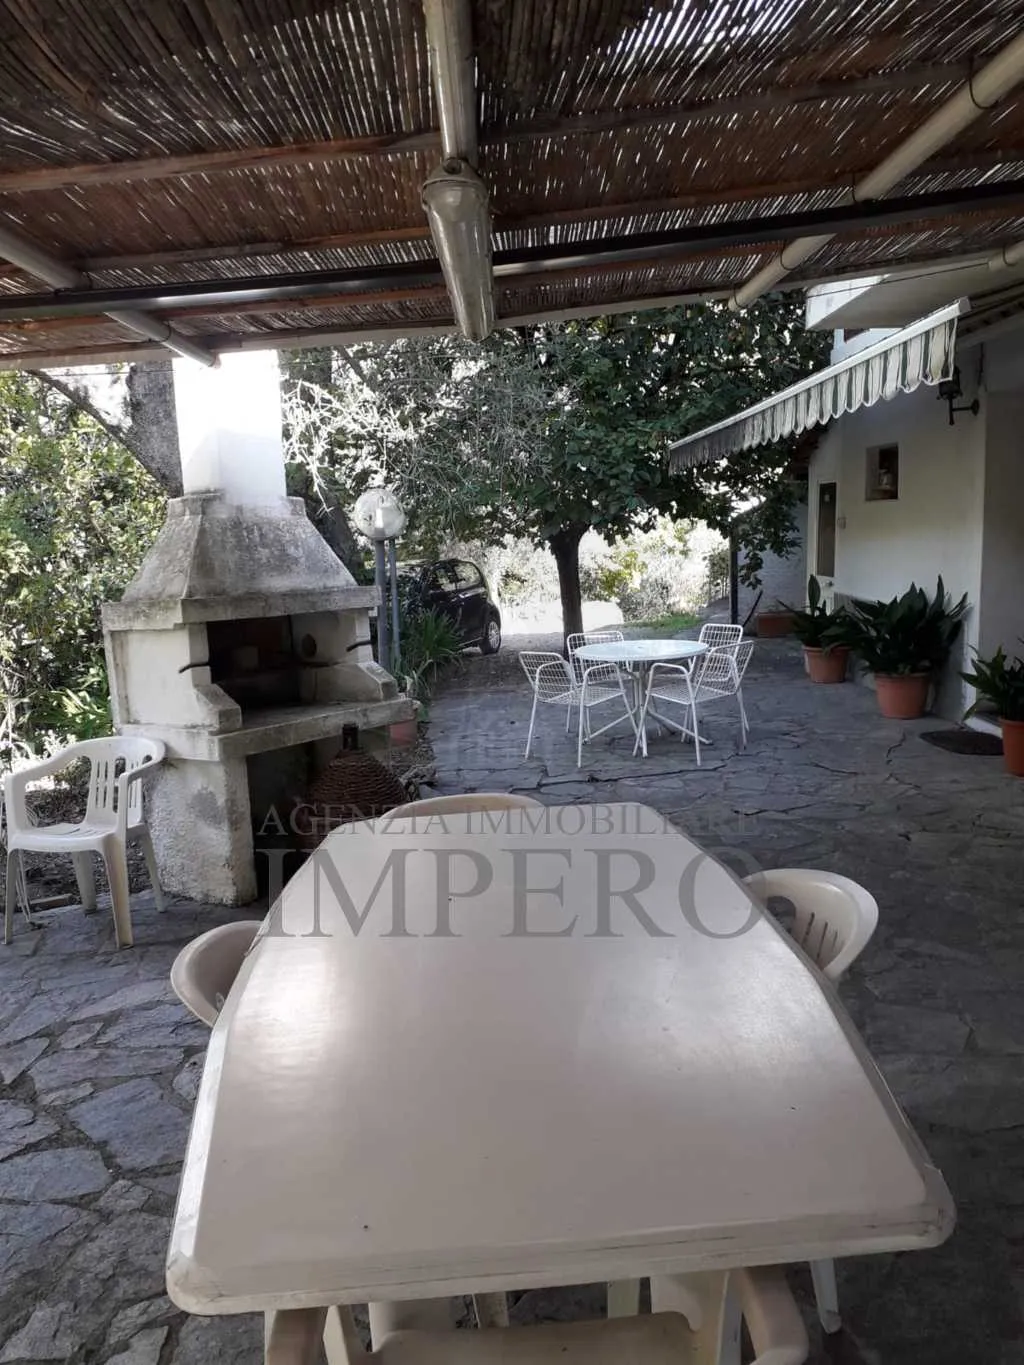 Immagine per Porzione di casa in vendita a Olivetta San Michele via Libri